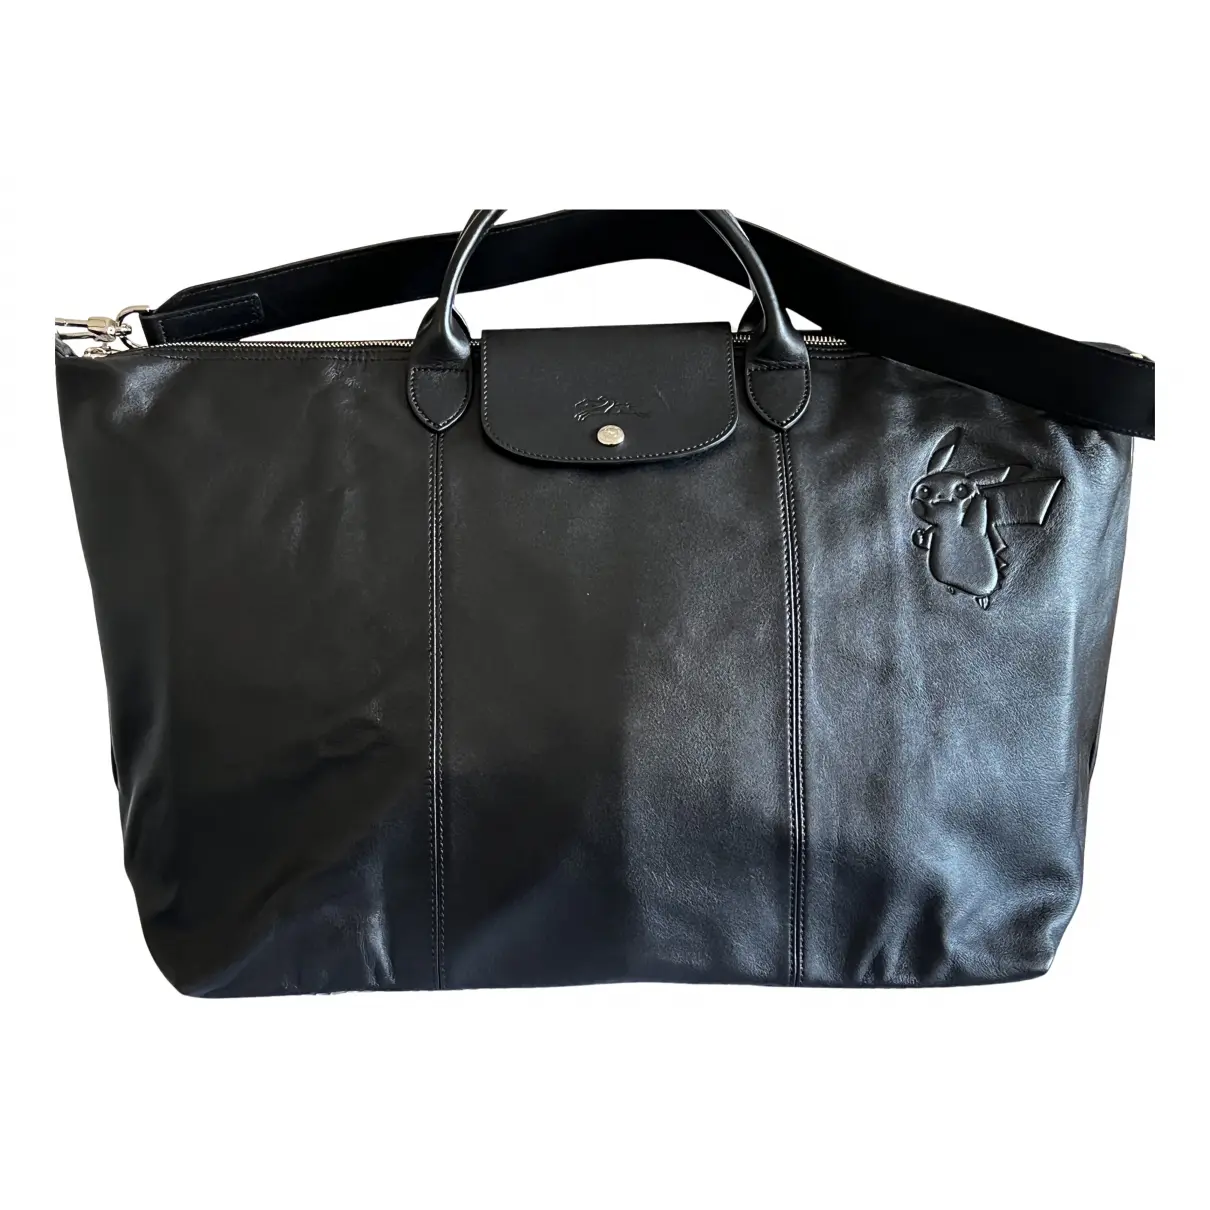 Pliage leather travel bag Longchamp